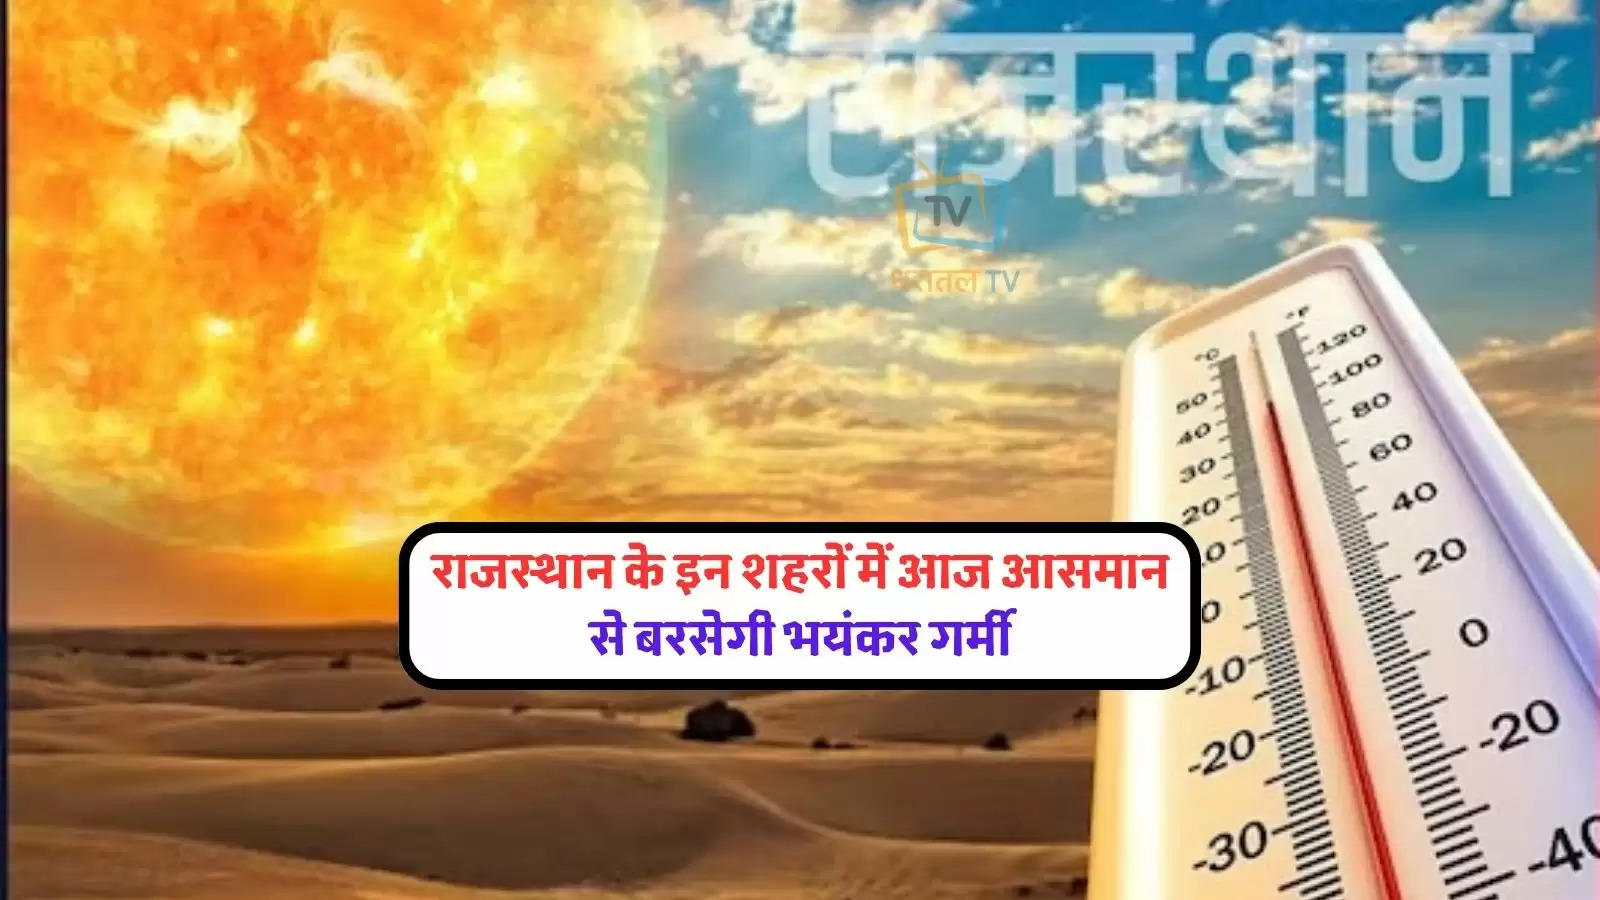 rajasthan-weather-forecast-no-respite-from-heatwave-jaisalmer-temprture-46-degree-imd-update/articleshow/100221899.cms